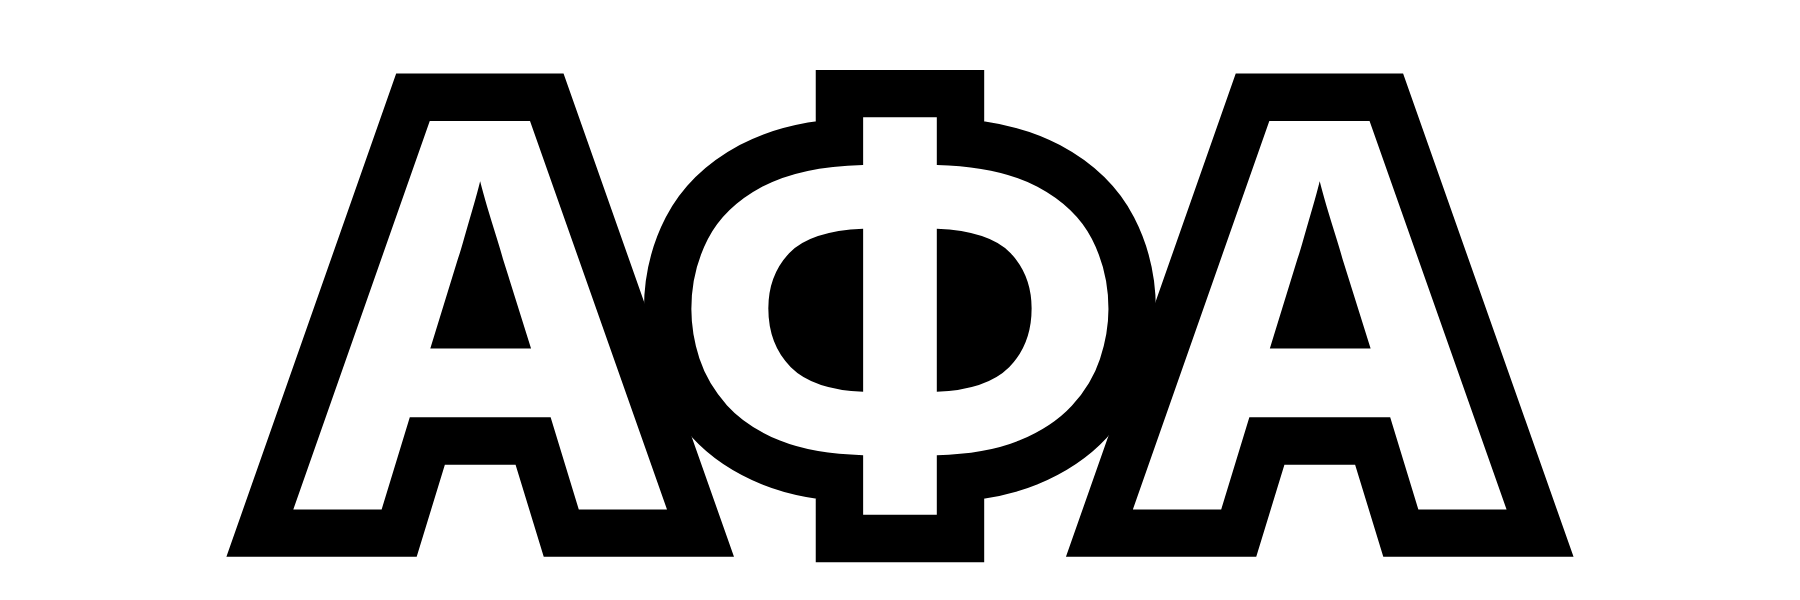 Alpha Phi Alpha Fraternity Inc Center For Fraternity Sorority